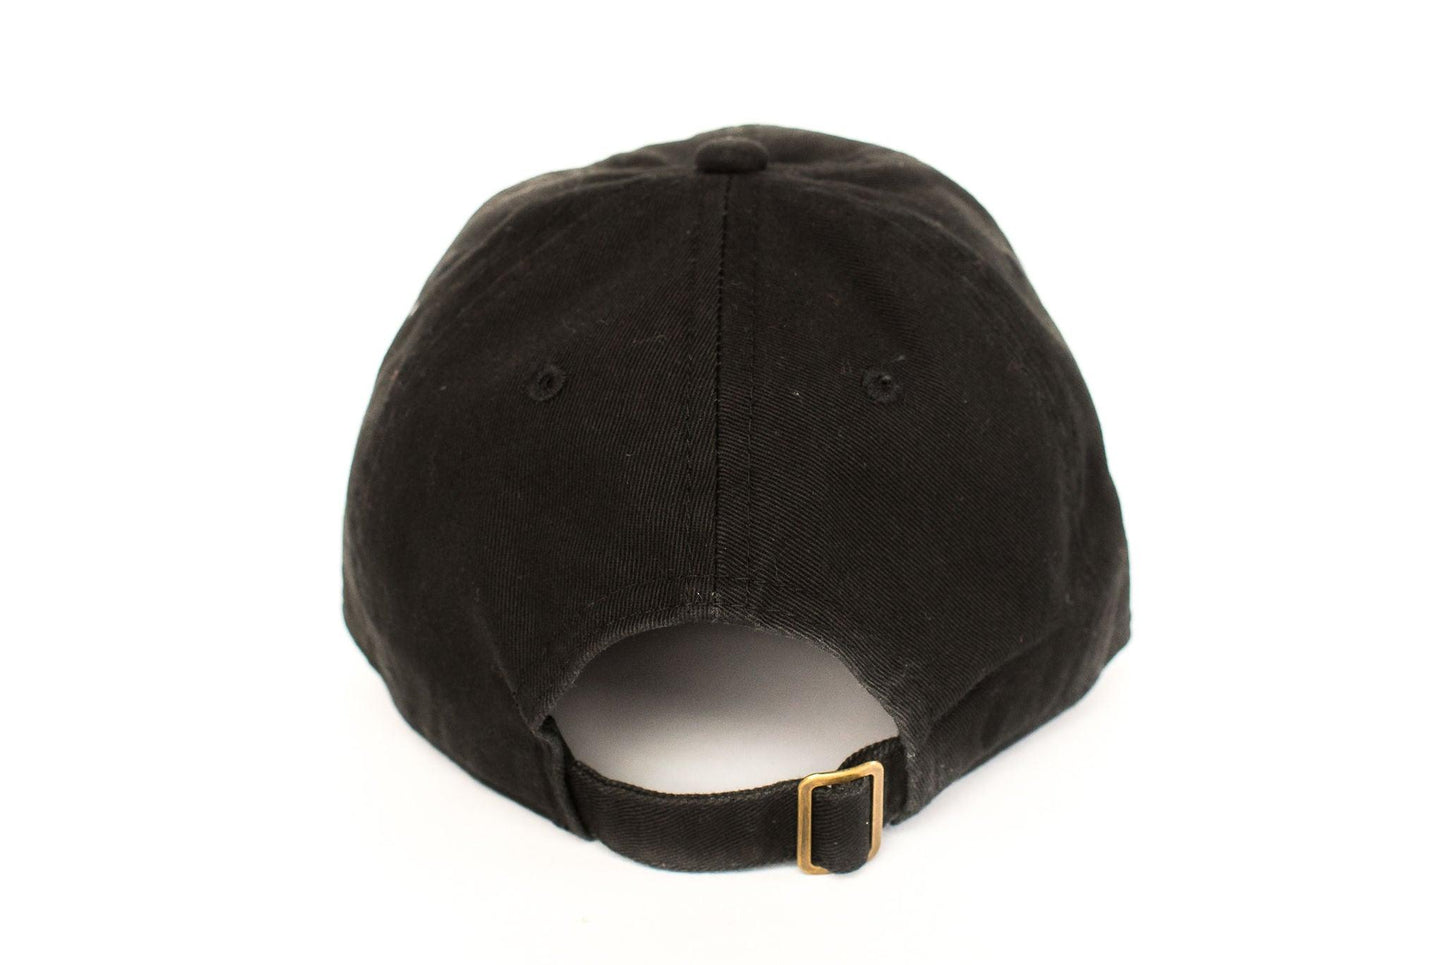 Black Nana Hat